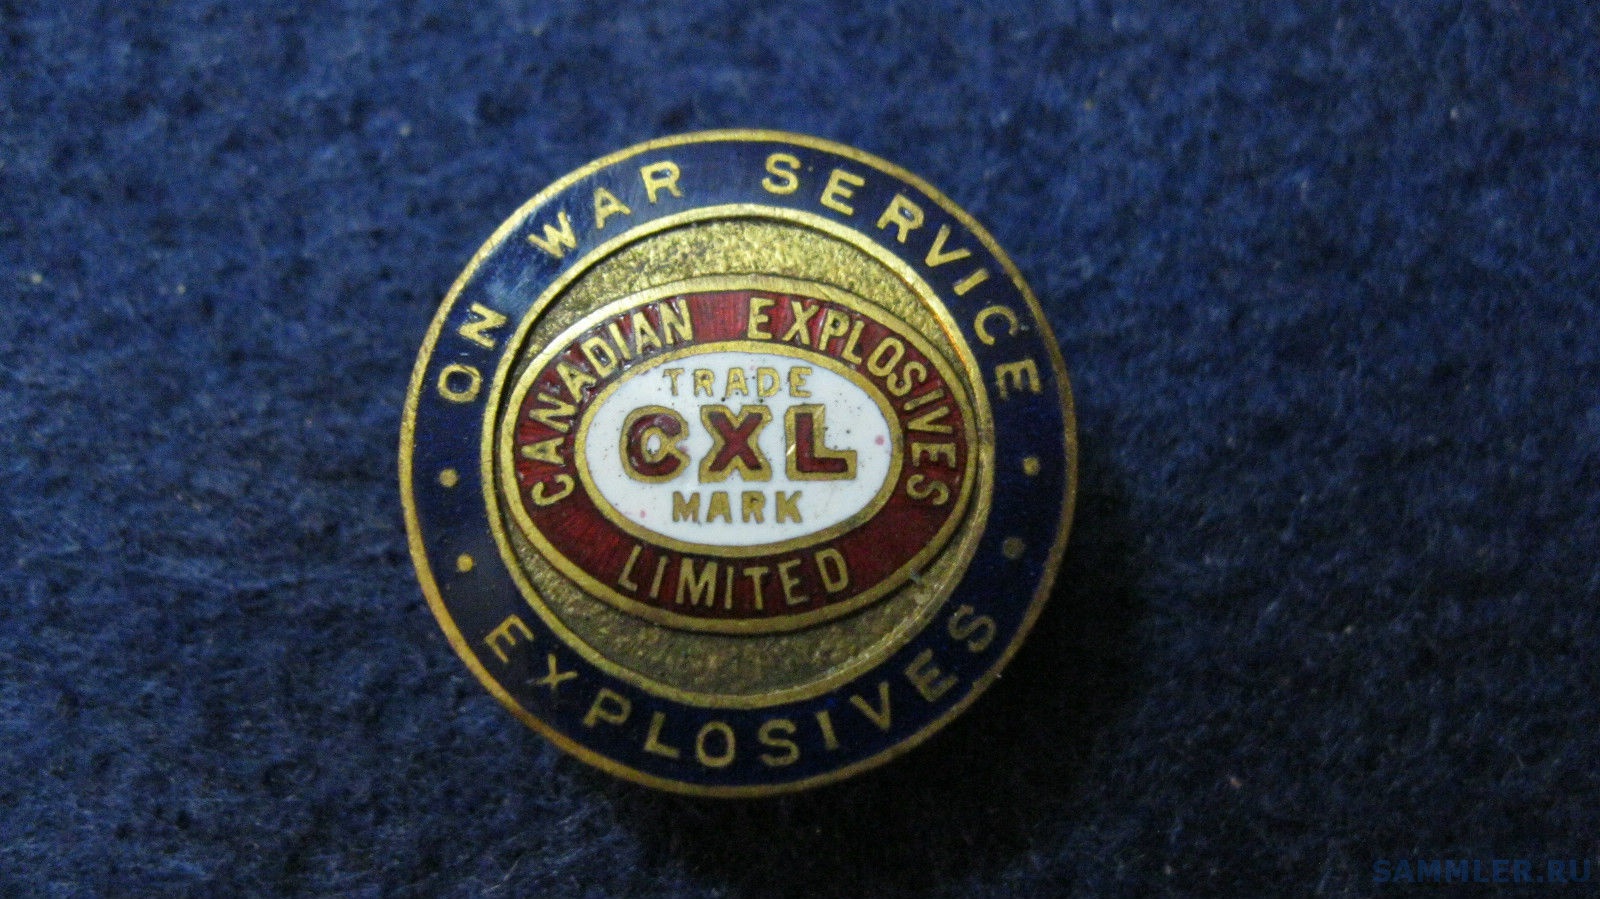 Canadian Explosives Limited On War Service.jpg